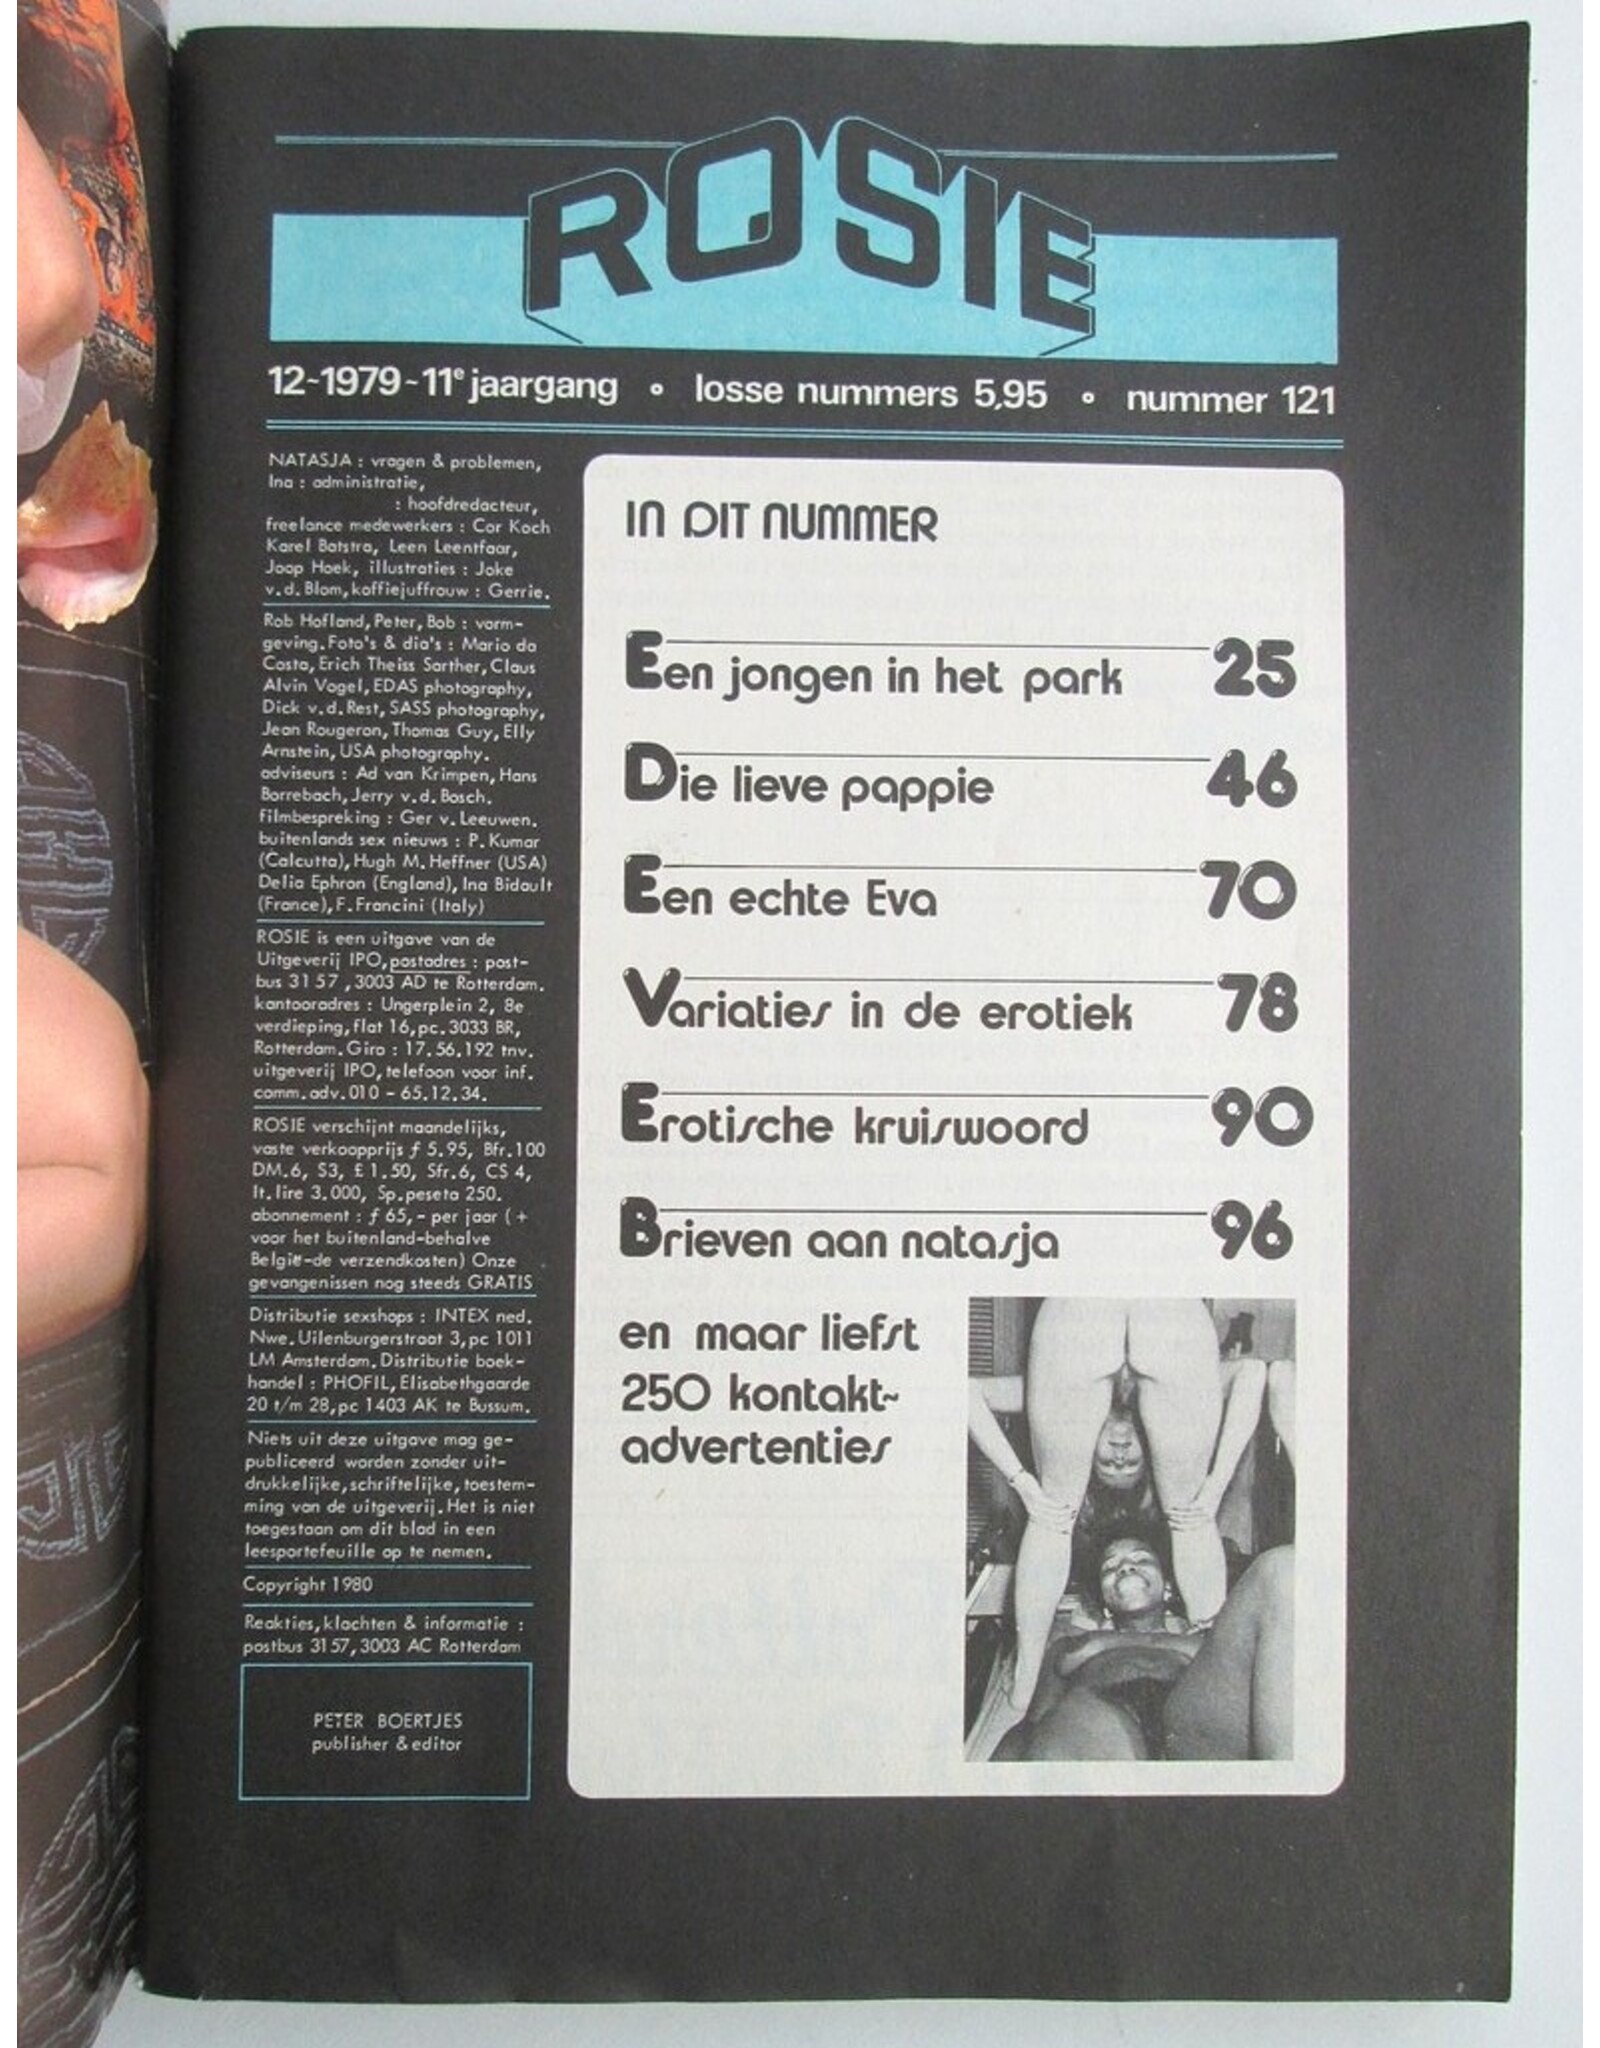 Peter Boertjes [ed.] - Rosie nummer 121 - 11e Jaargang. Het blad dat kontakten legt!!!